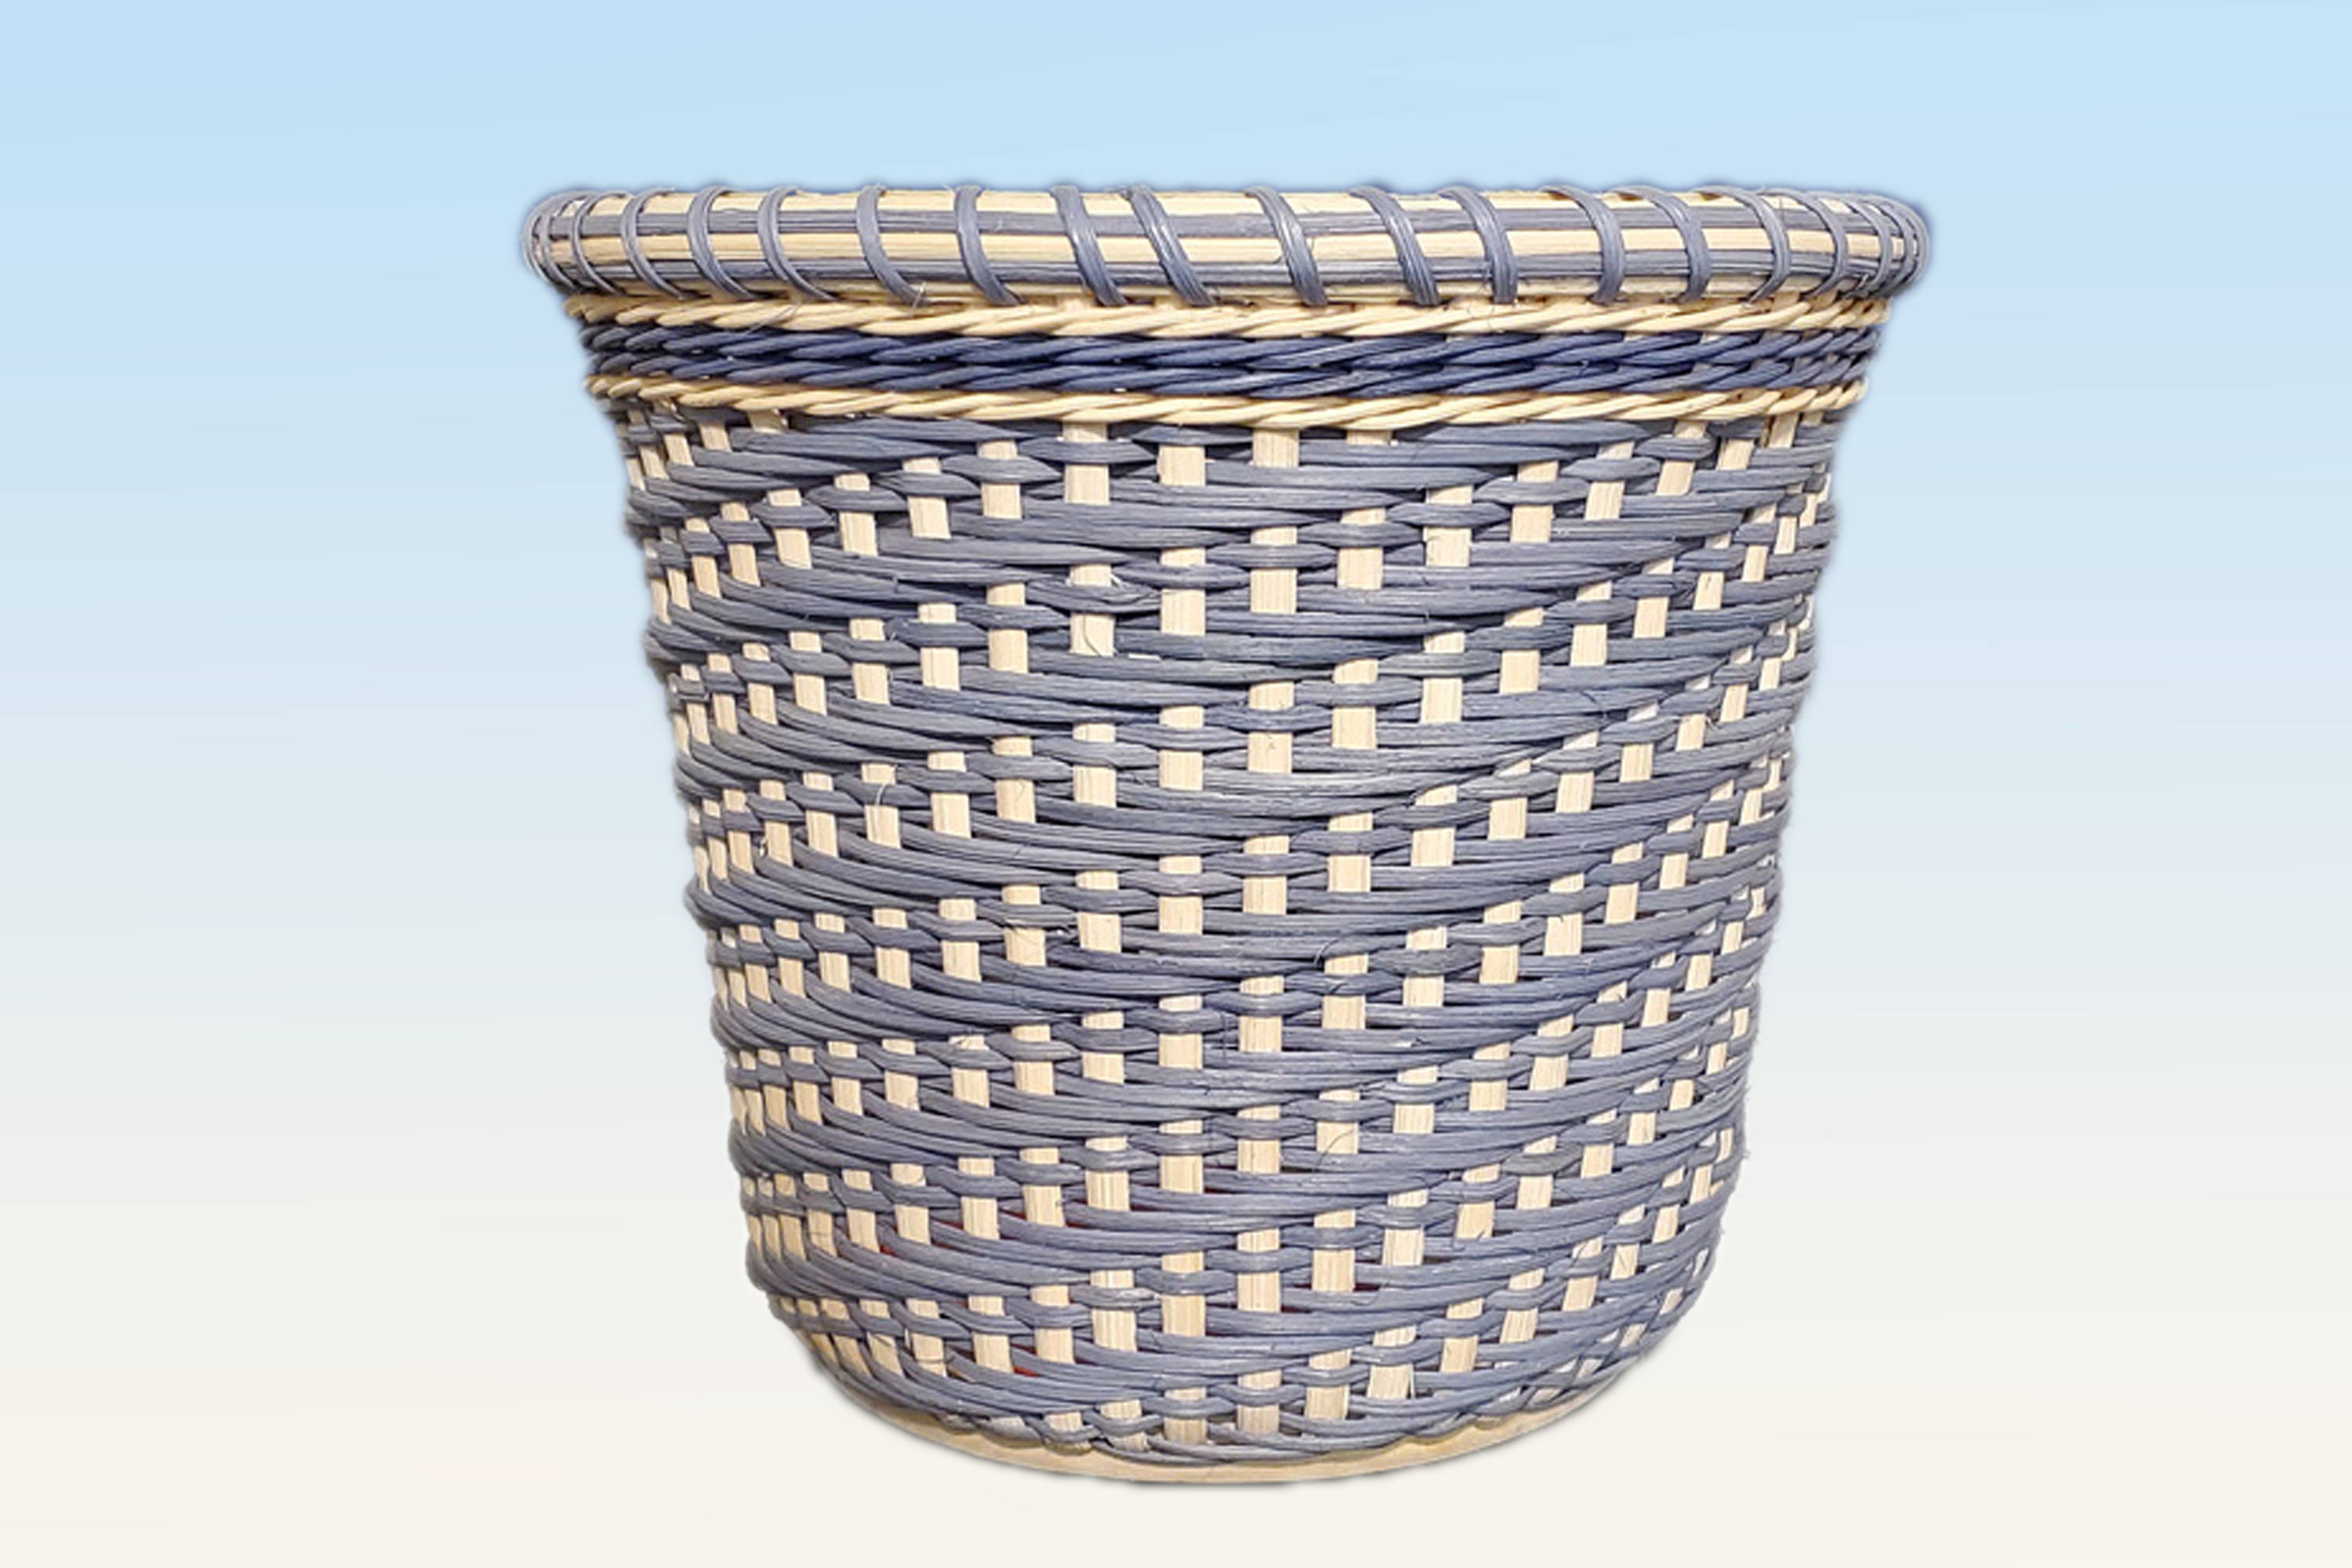 Little Rib Basket Weaving Kit - Cane Weaving Supplies